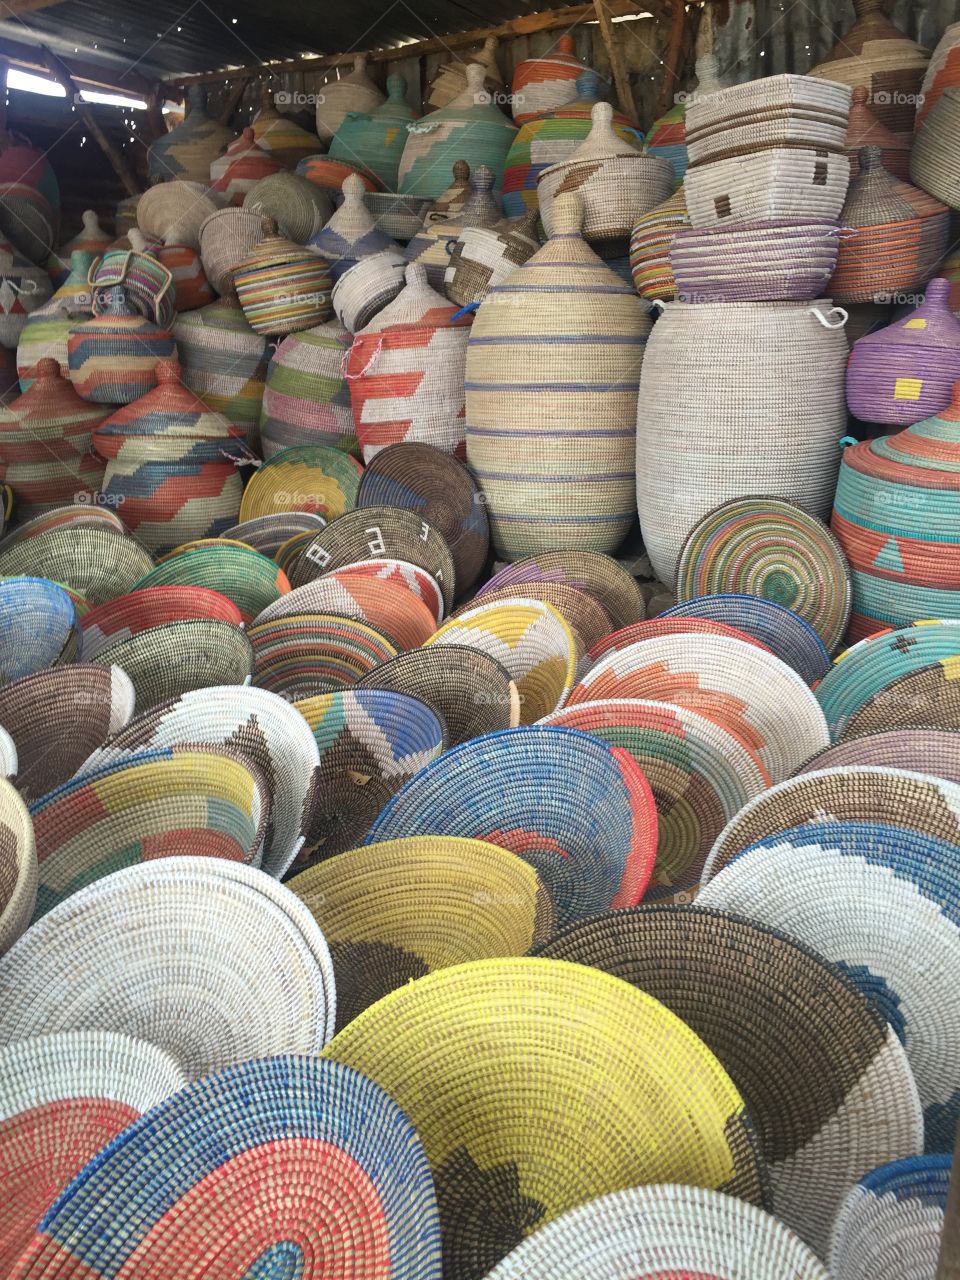 Baskets in Thiès, Senegal.